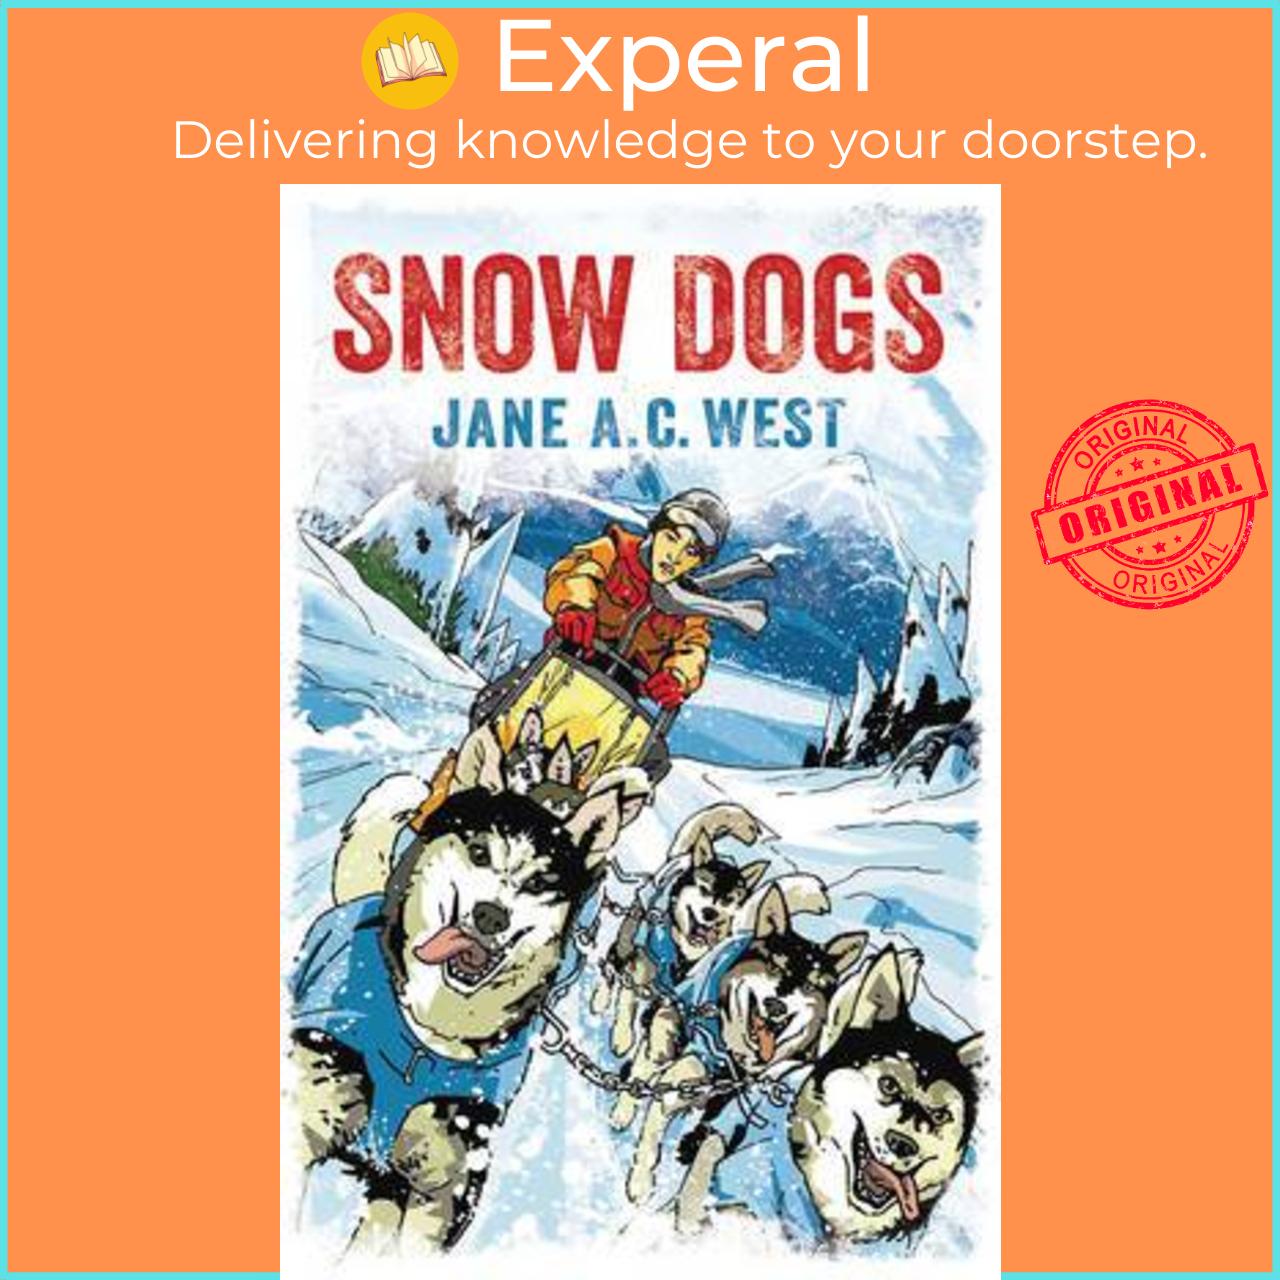 Sách - Snow Dogs by Jane A. C. West (UK edition, paperback)